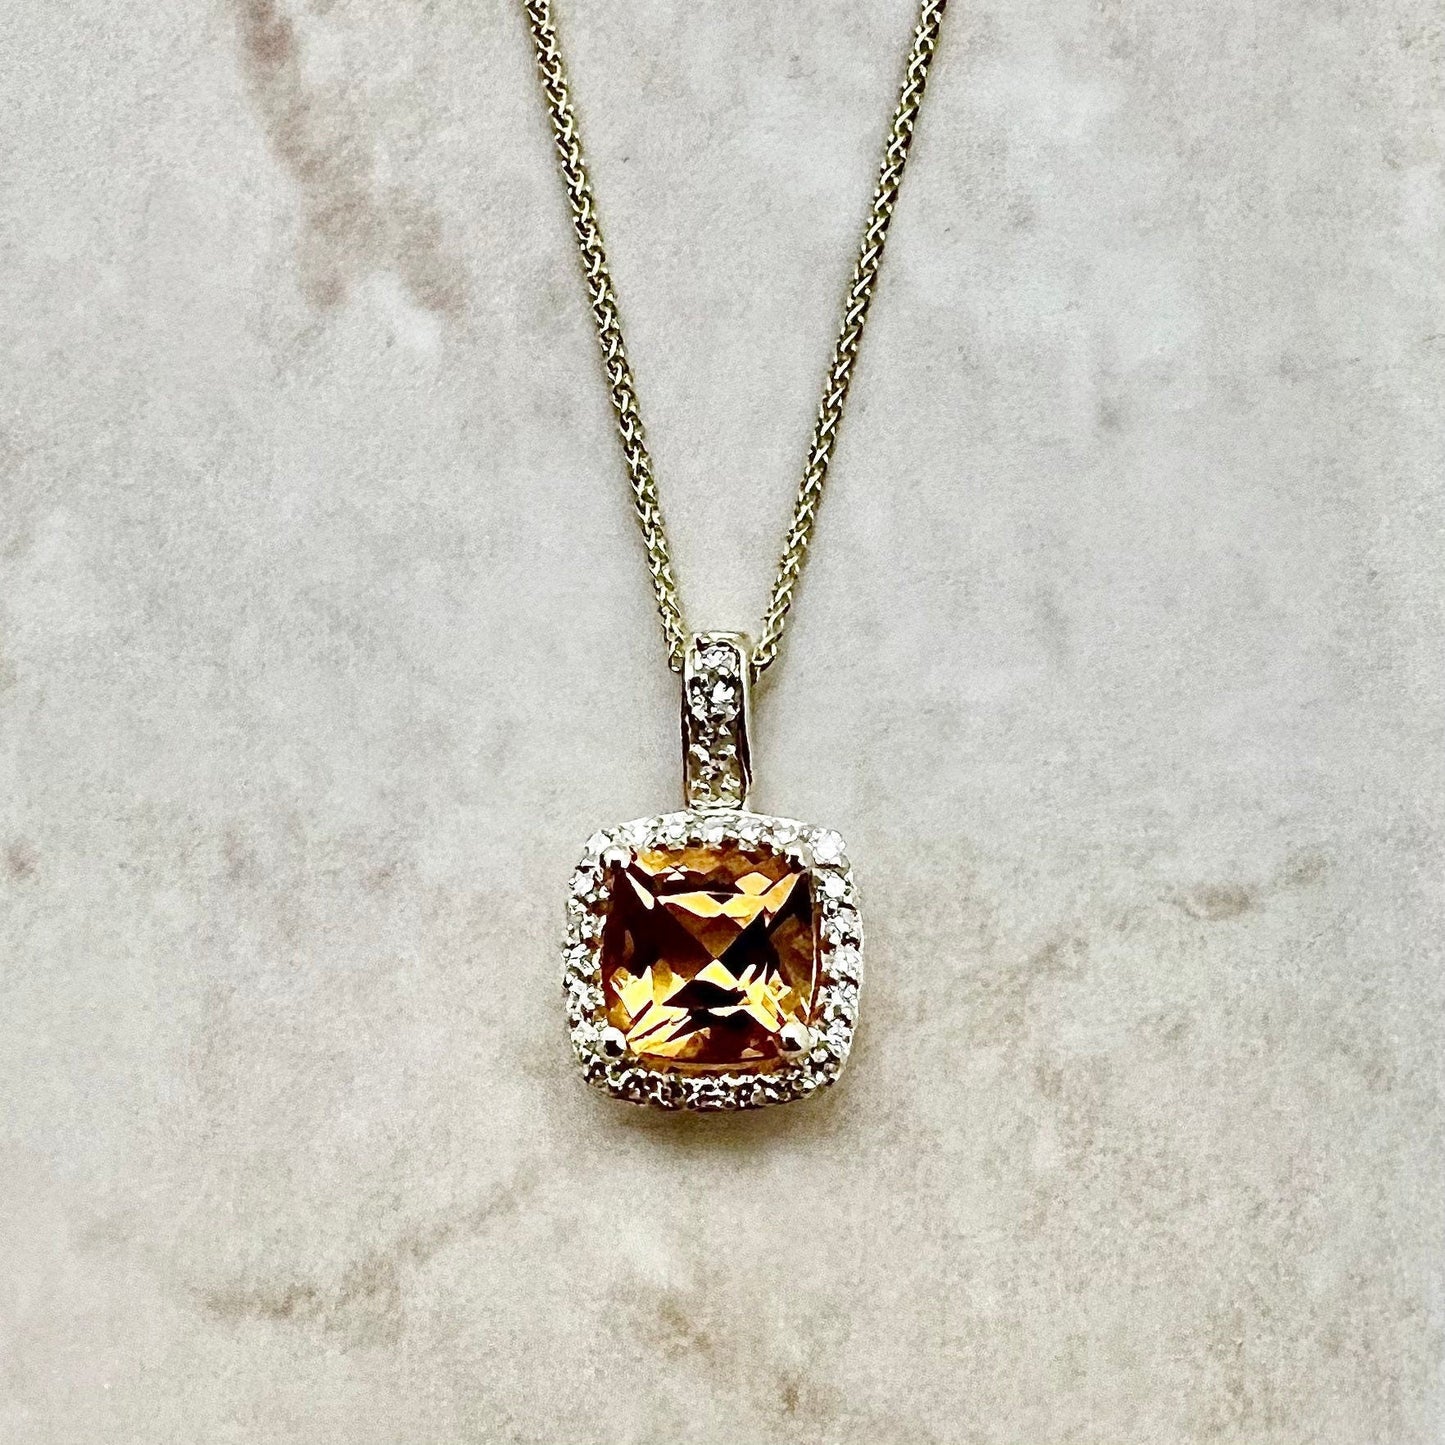 14K Citrine & Diamond Halo Pendant Necklace - Yellow Gold Pendant Necklace - November Birthstone - Genuine Gemstone - Birthday Gift For Her